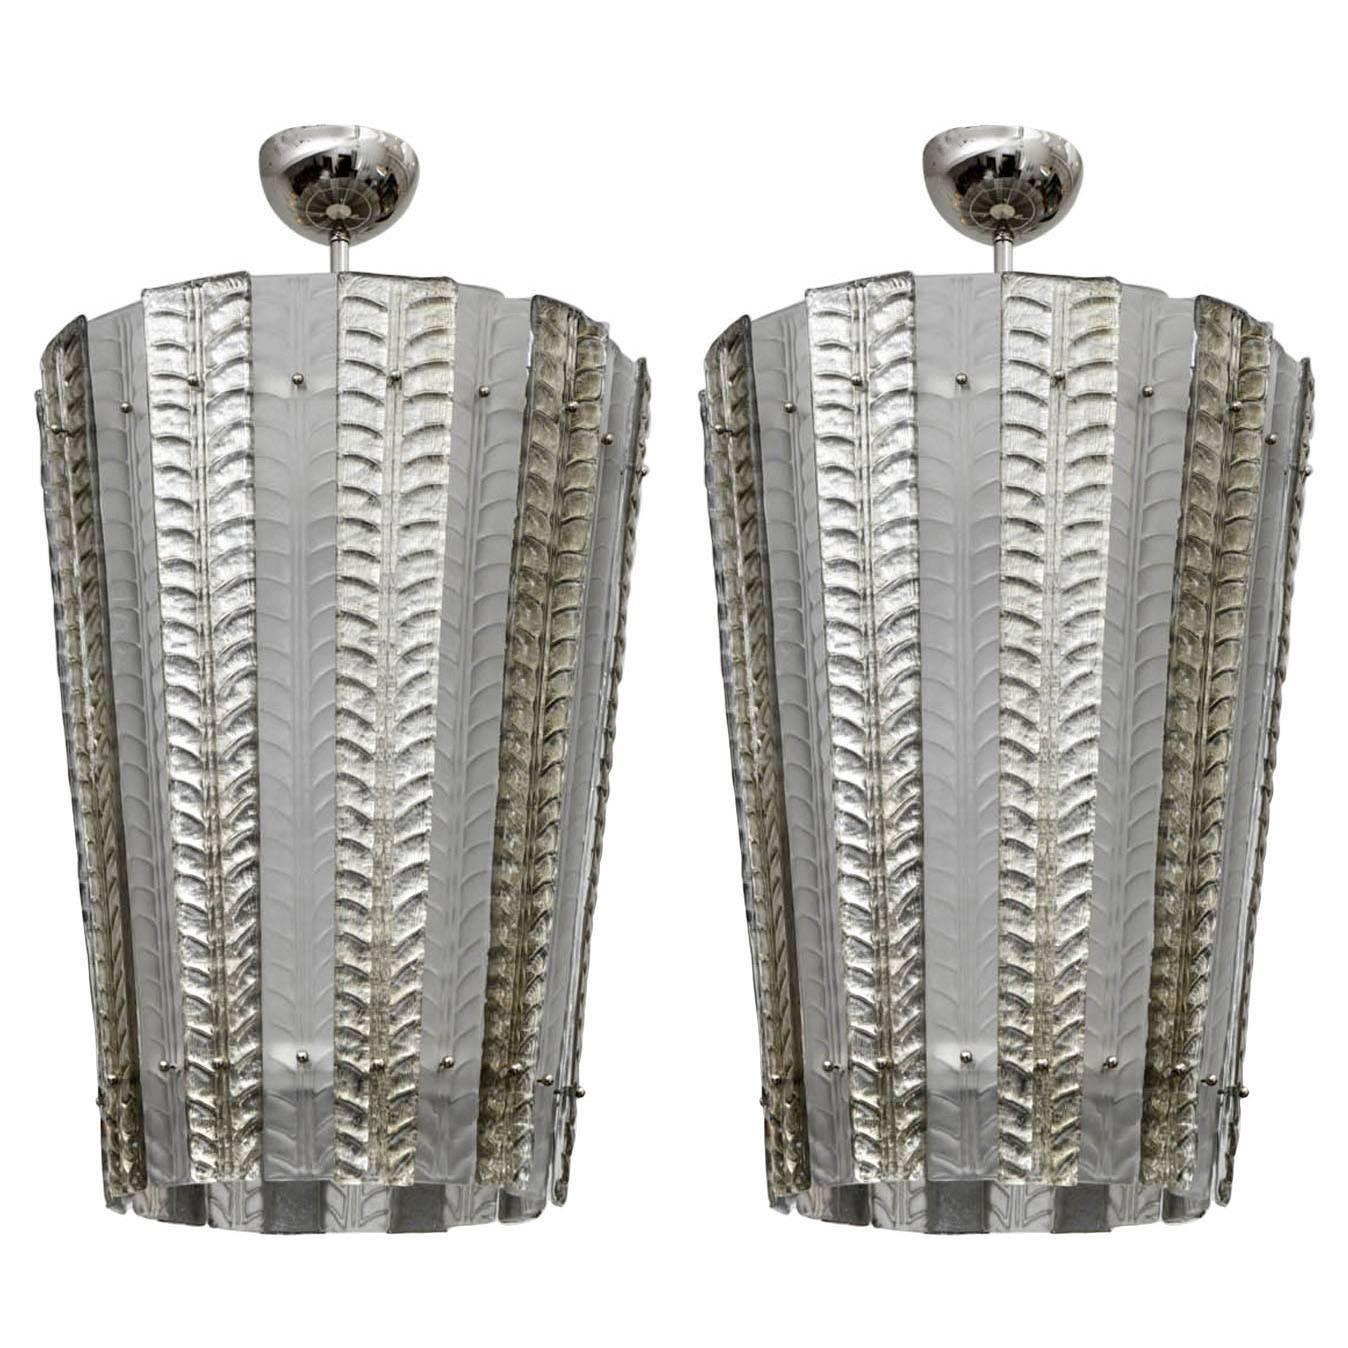 Gorgeous Pair of Murano Glass Lanterns